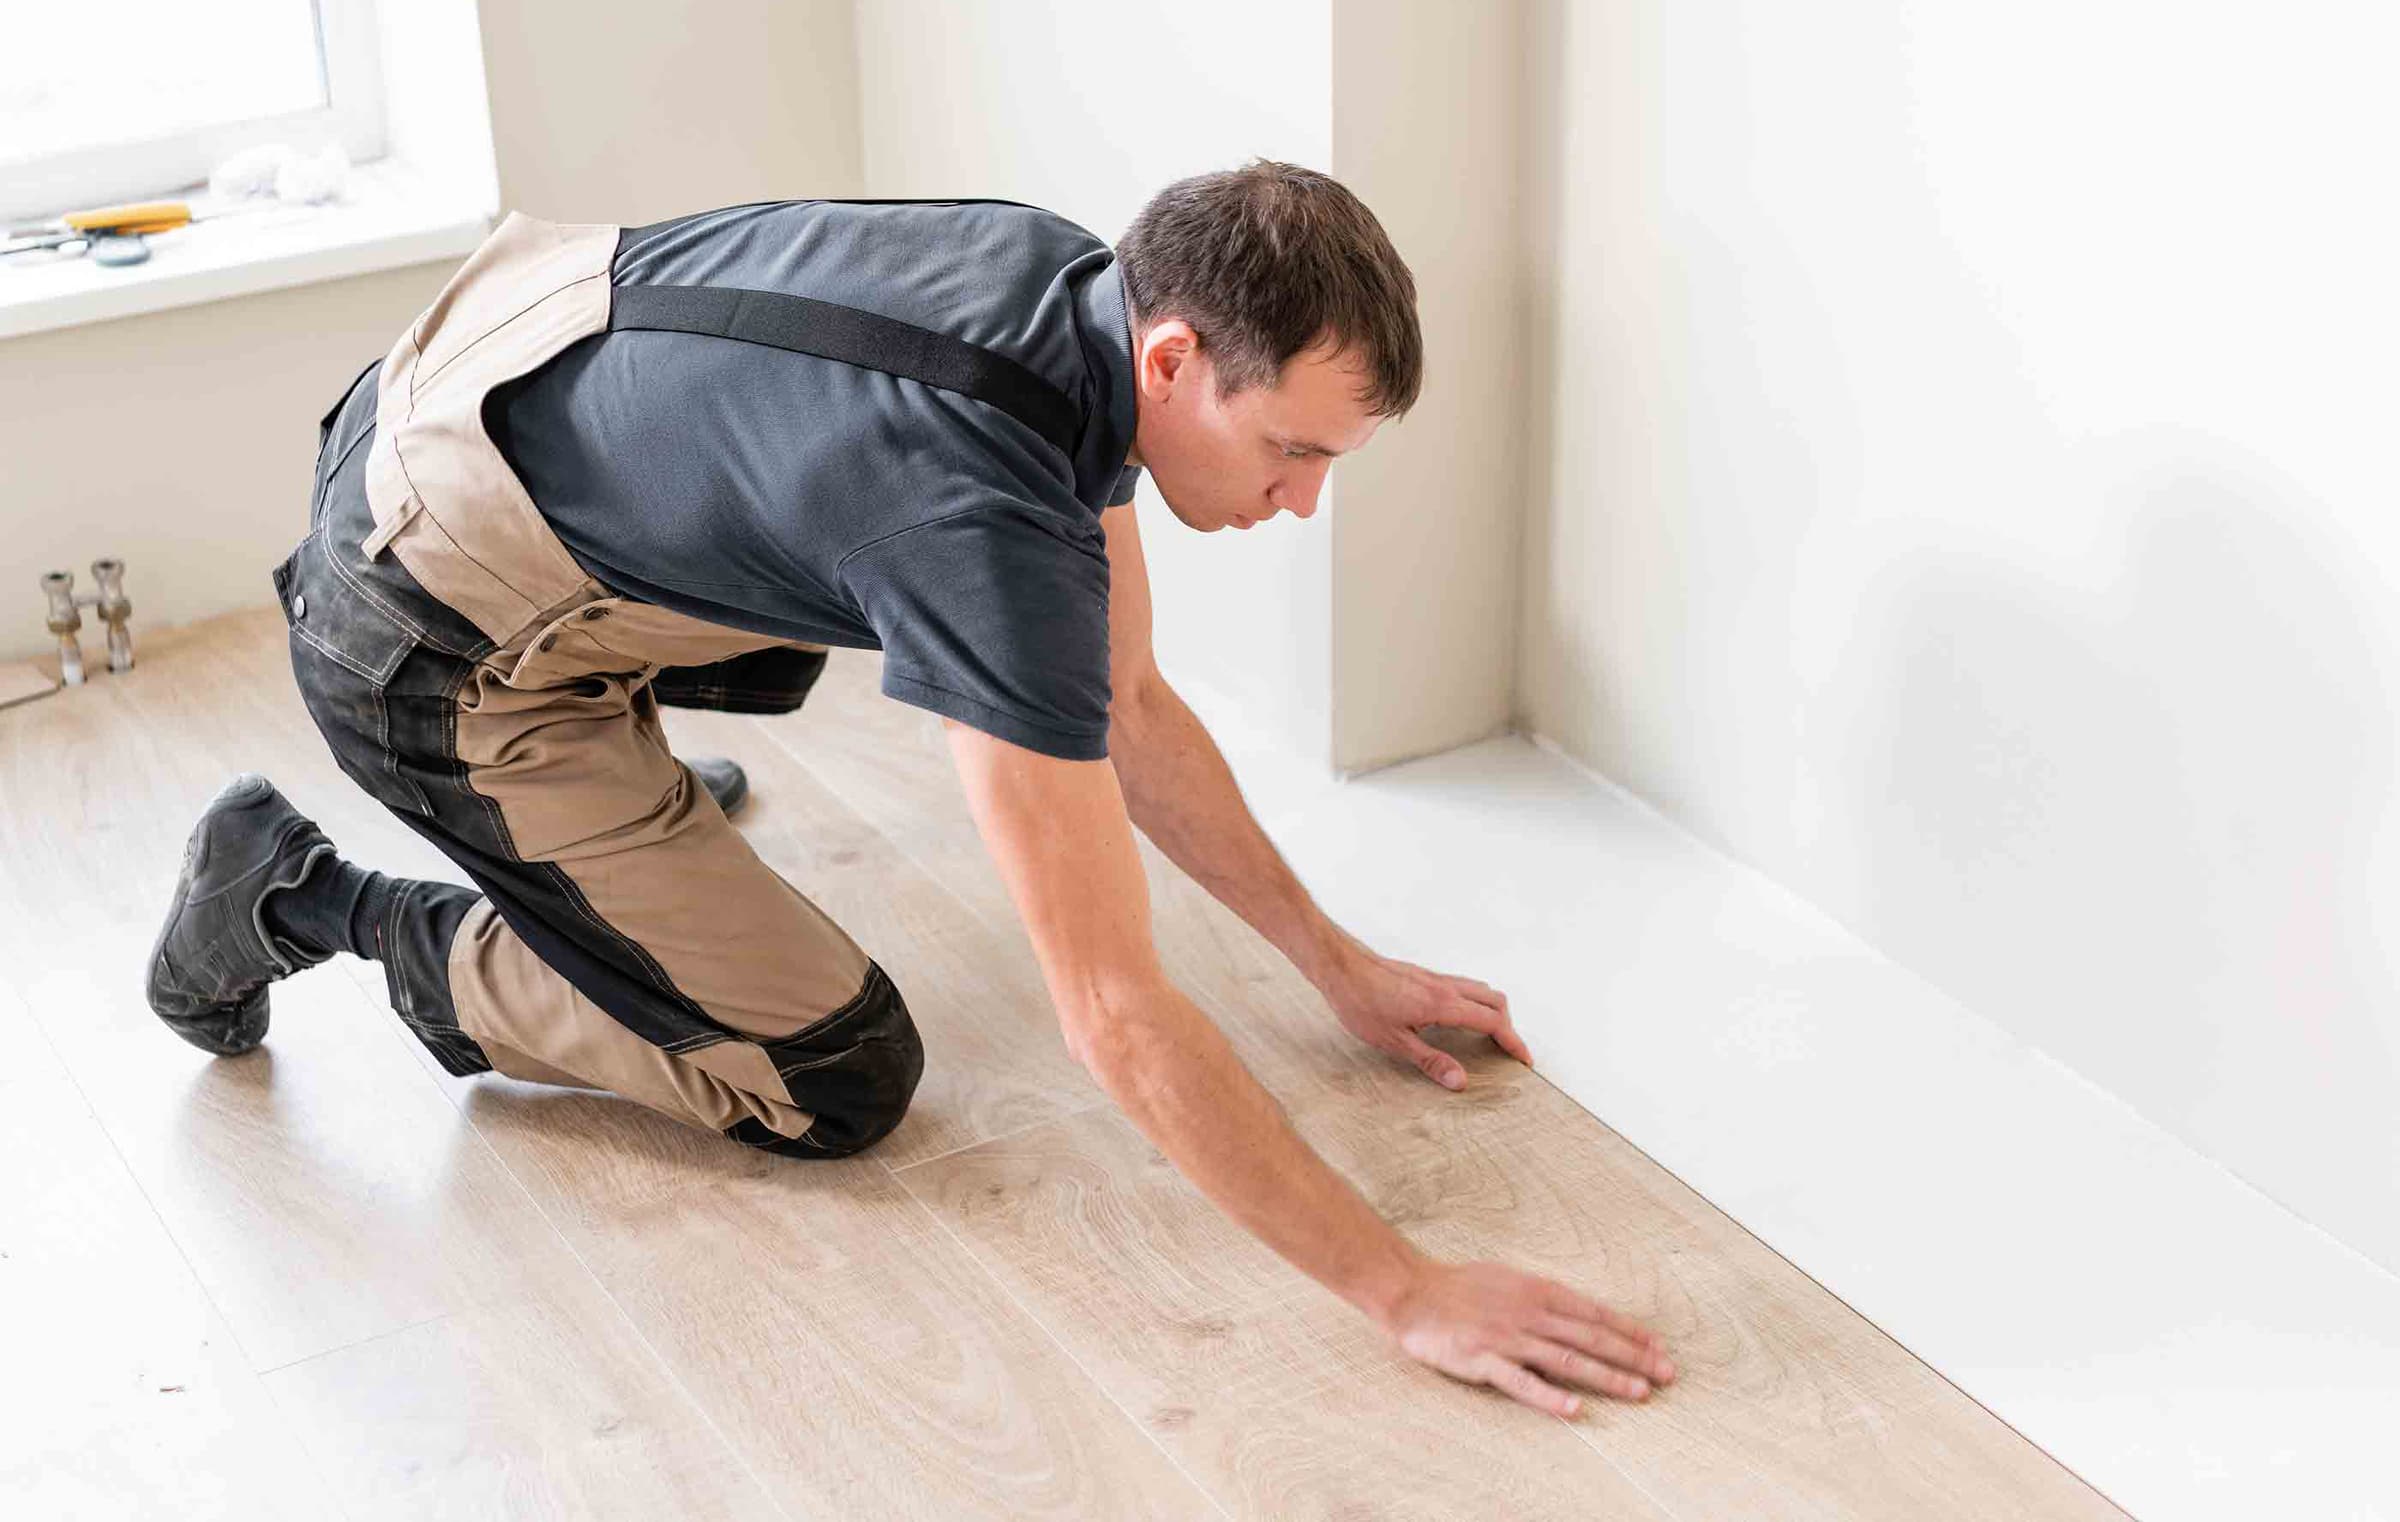 Male worker installing new wooden laminate flooring on a warm film foil floor